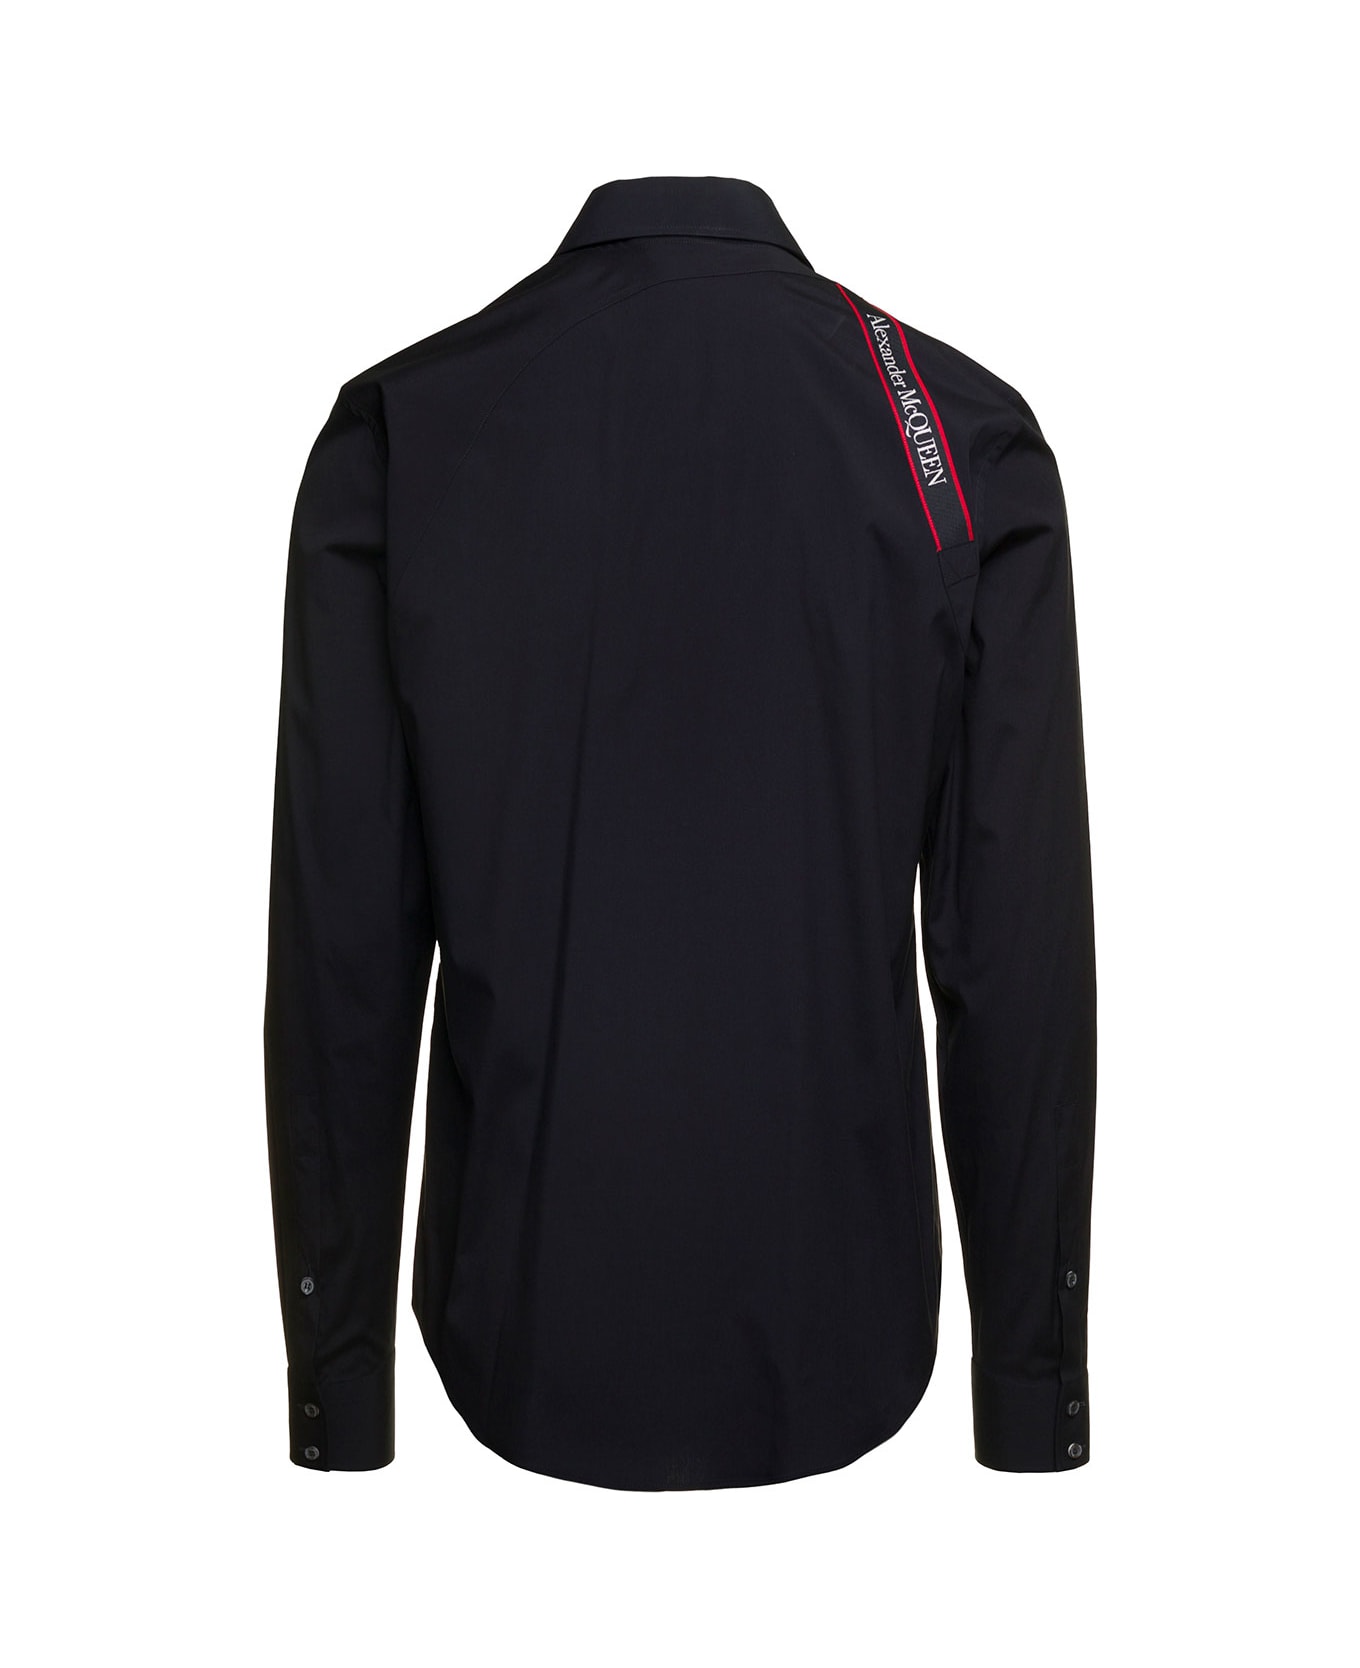 Alexander McQueen Shirt With Harness Detail - Black シャツ